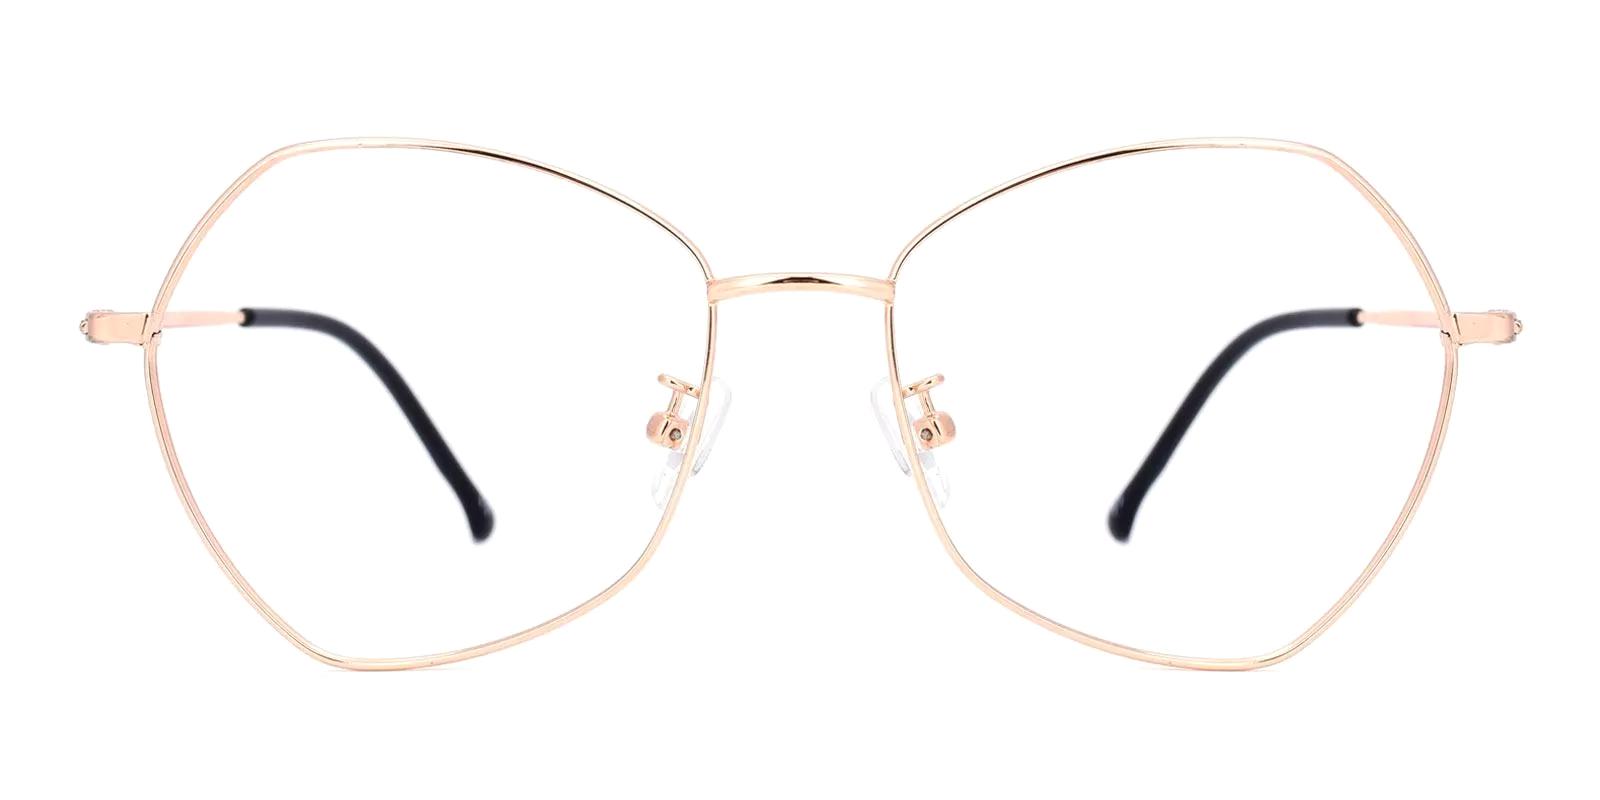 Thellet Rosegold Metal Eyeglasses , NosePads Frames from ABBE Glasses